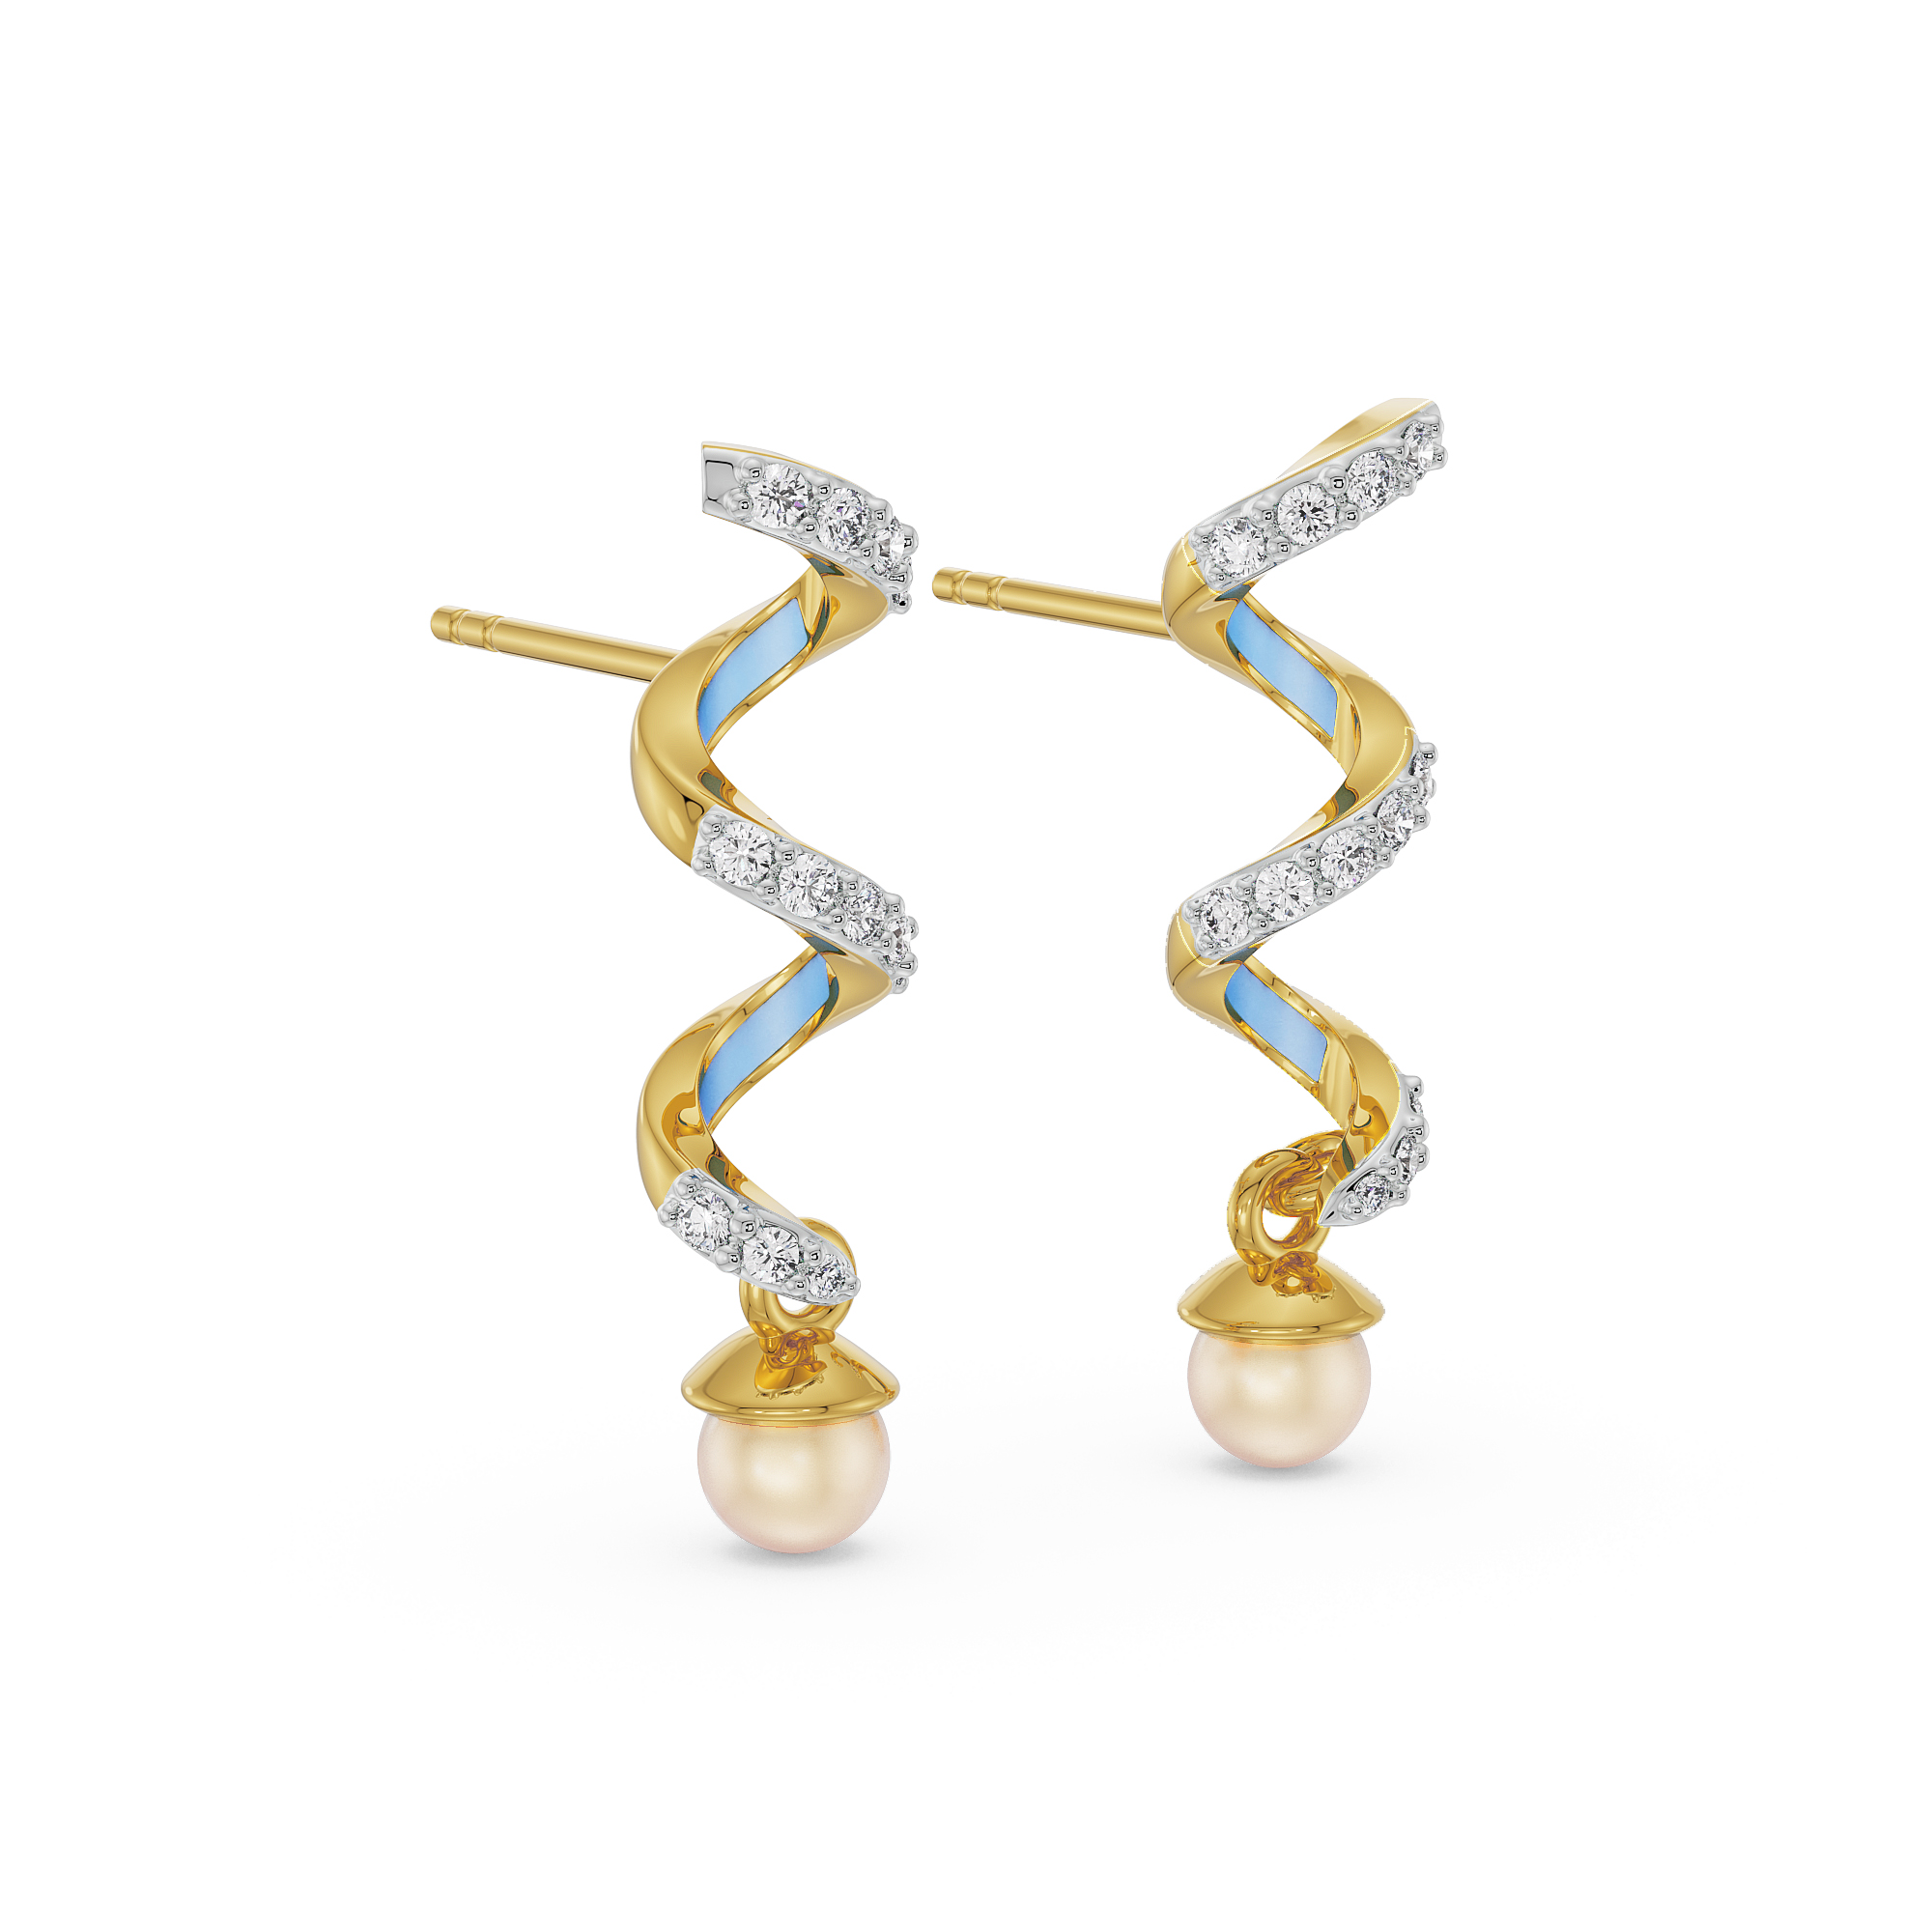 Designer Stud Earrings: Lulu Jack Single Bezel Diamond Studs 14K Gold ·  Dana Rebecca Designs